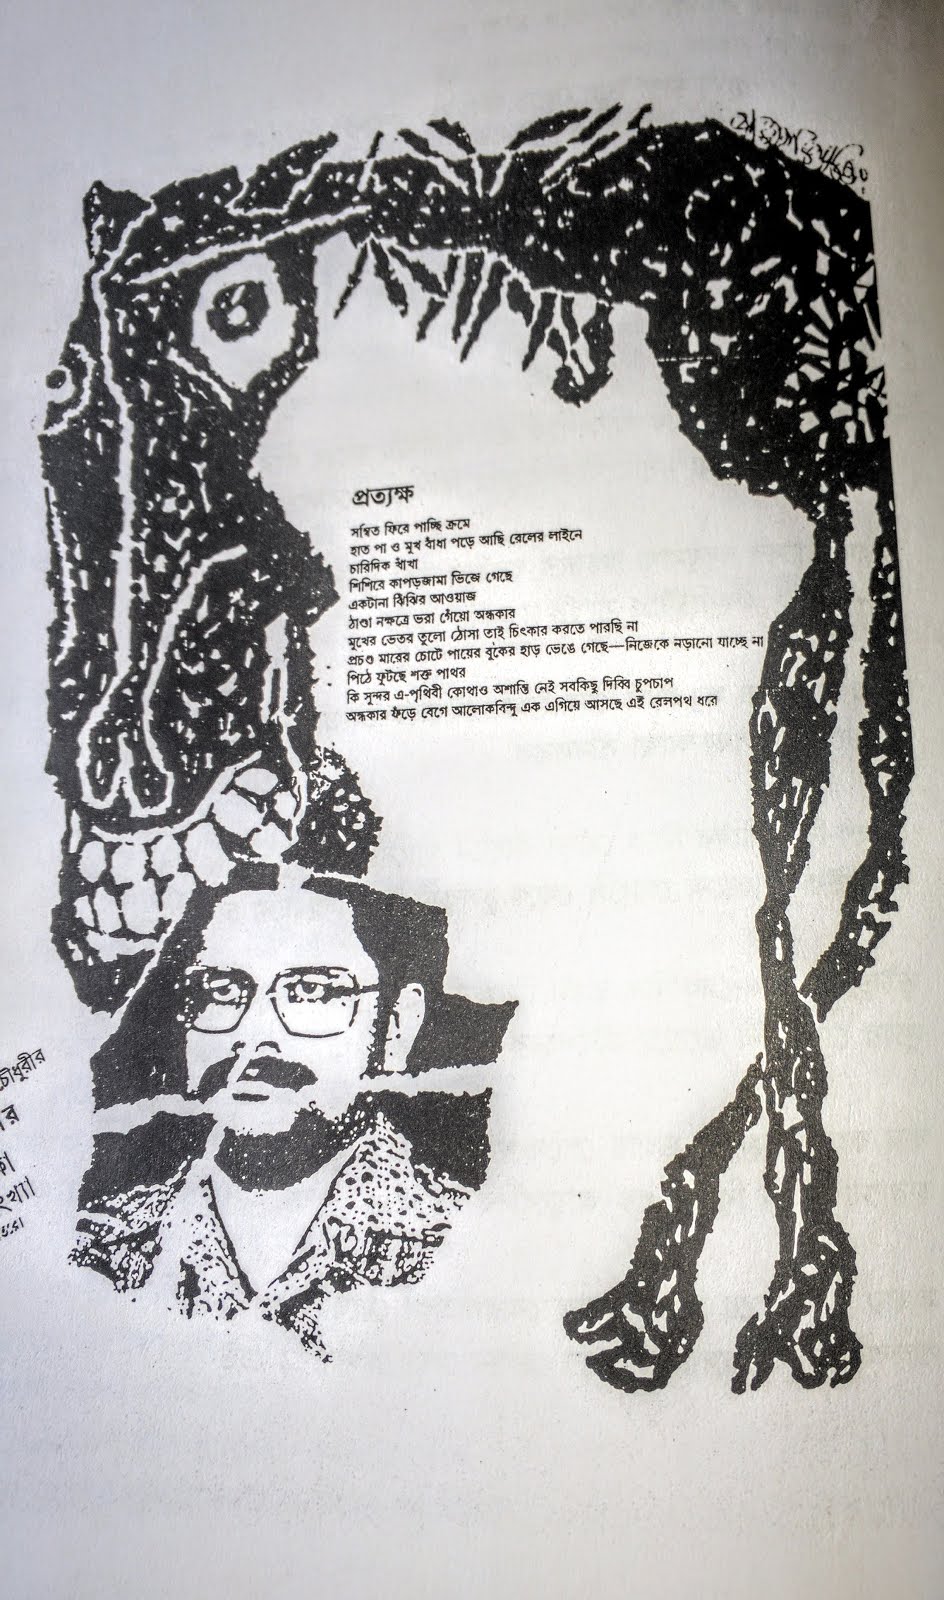 Prokash Karmakar drawing ; Malay Roychoudhury poem